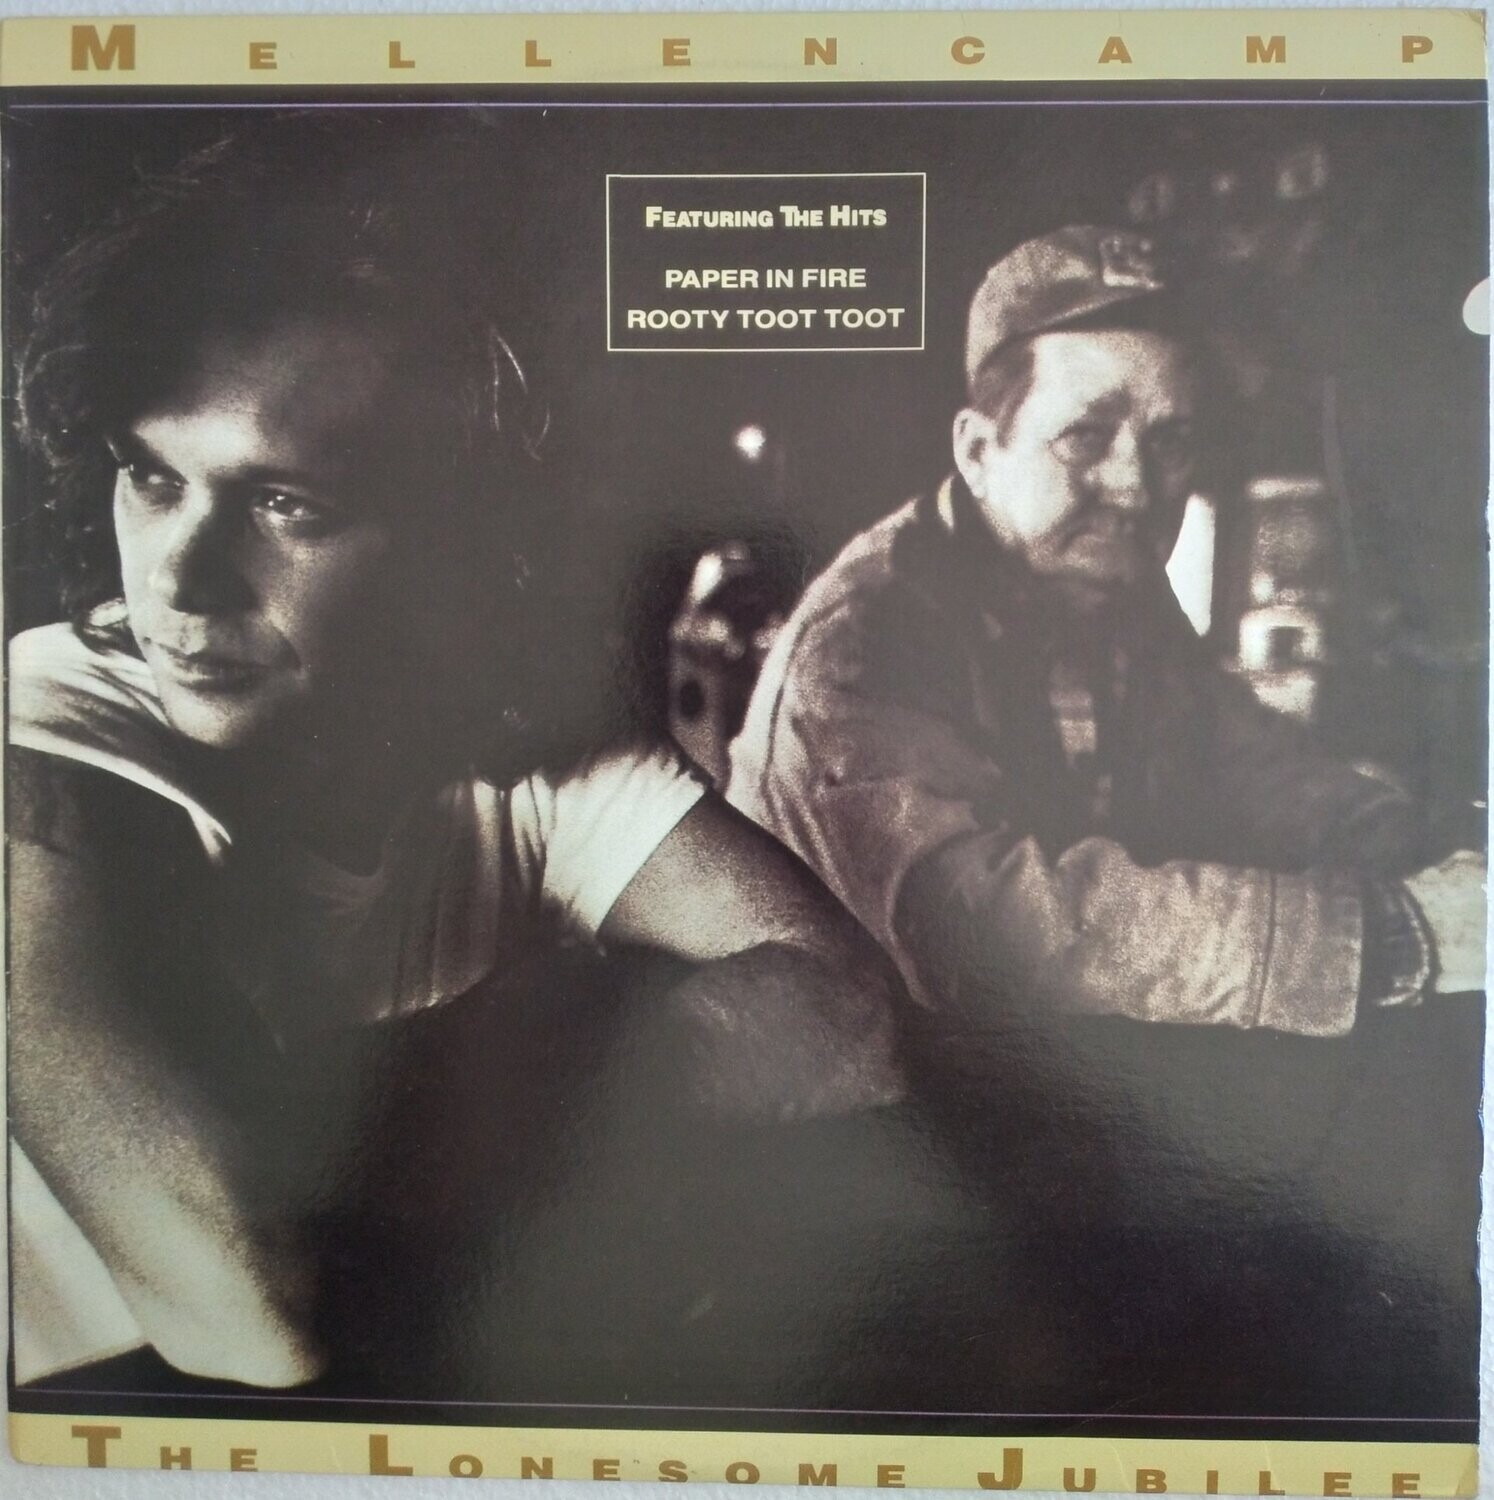 John Mellencamp - The lonesome jubilee (1987)